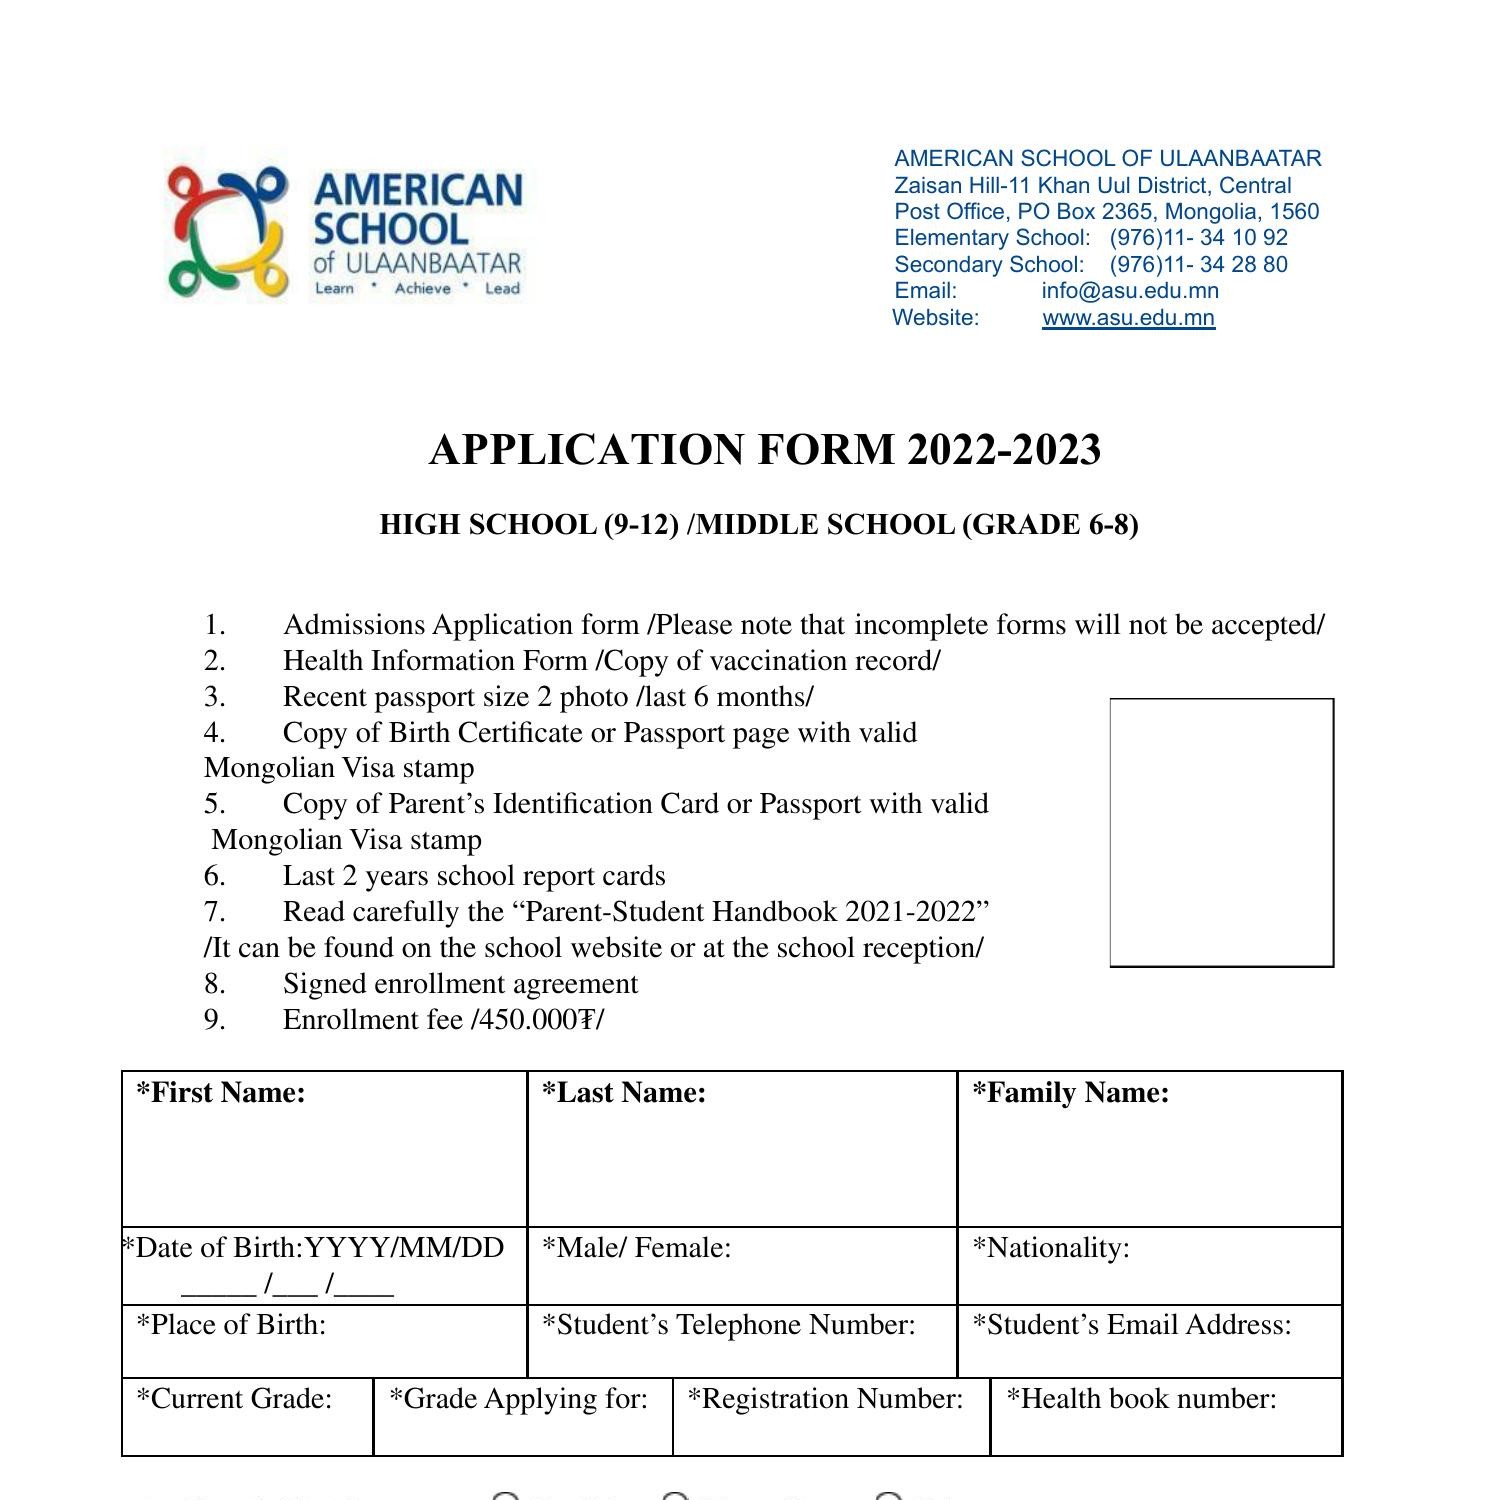 Ss Application Form 2022 2023 Engpdf Docdroid 6802